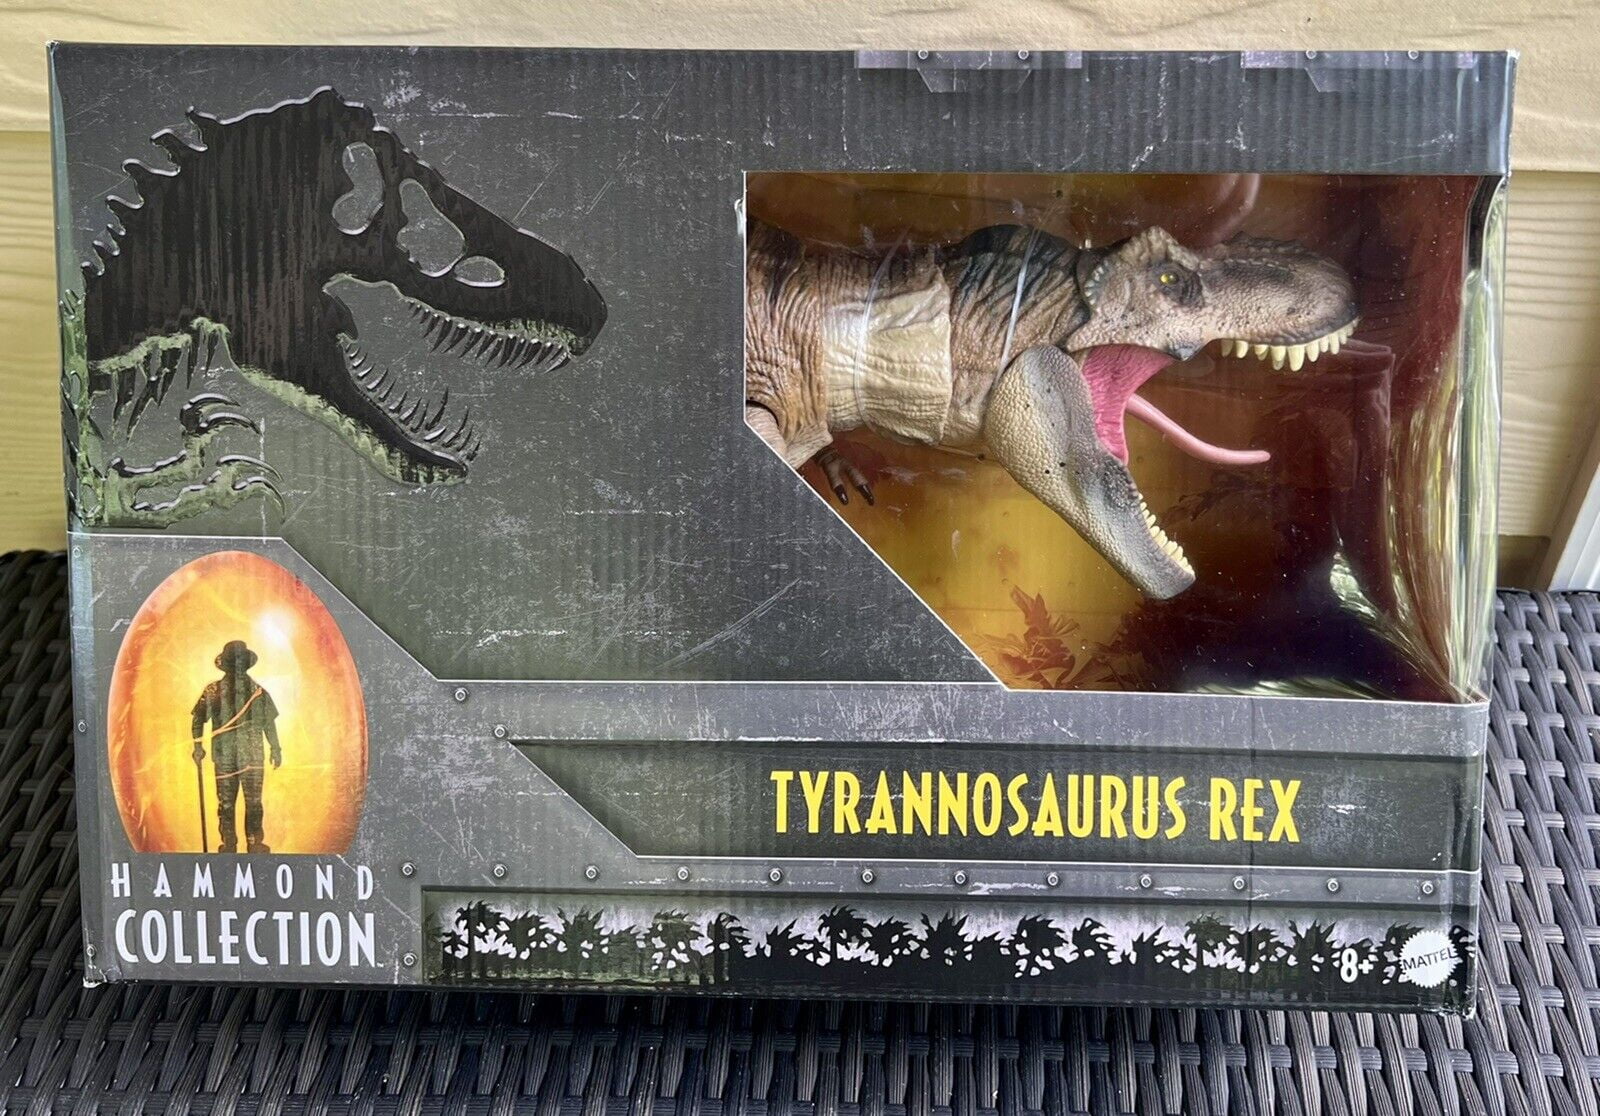 My Tyrannosaurus Rex Dinosaur Collection With Jurassic World! T